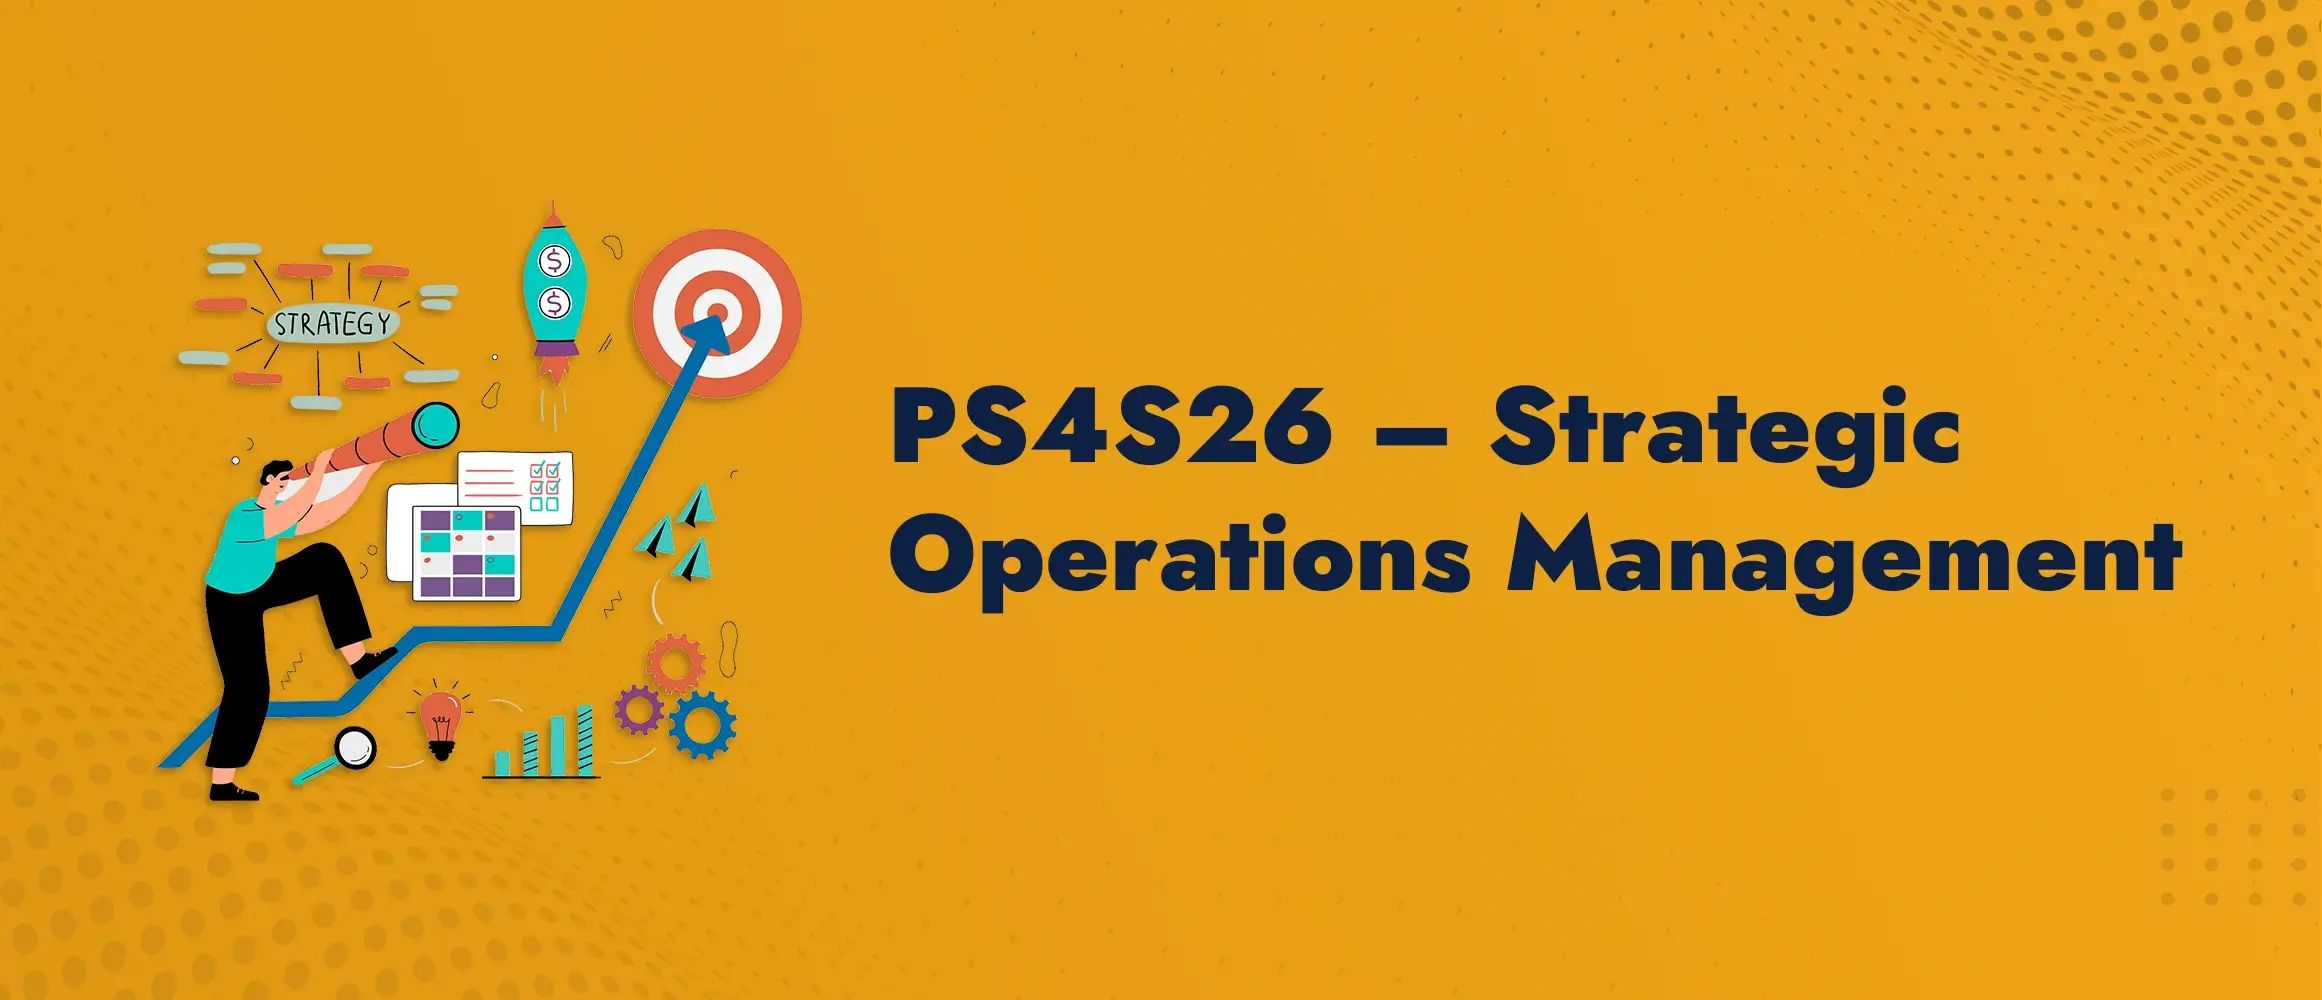 PS4S26 Strategic Operations Managements